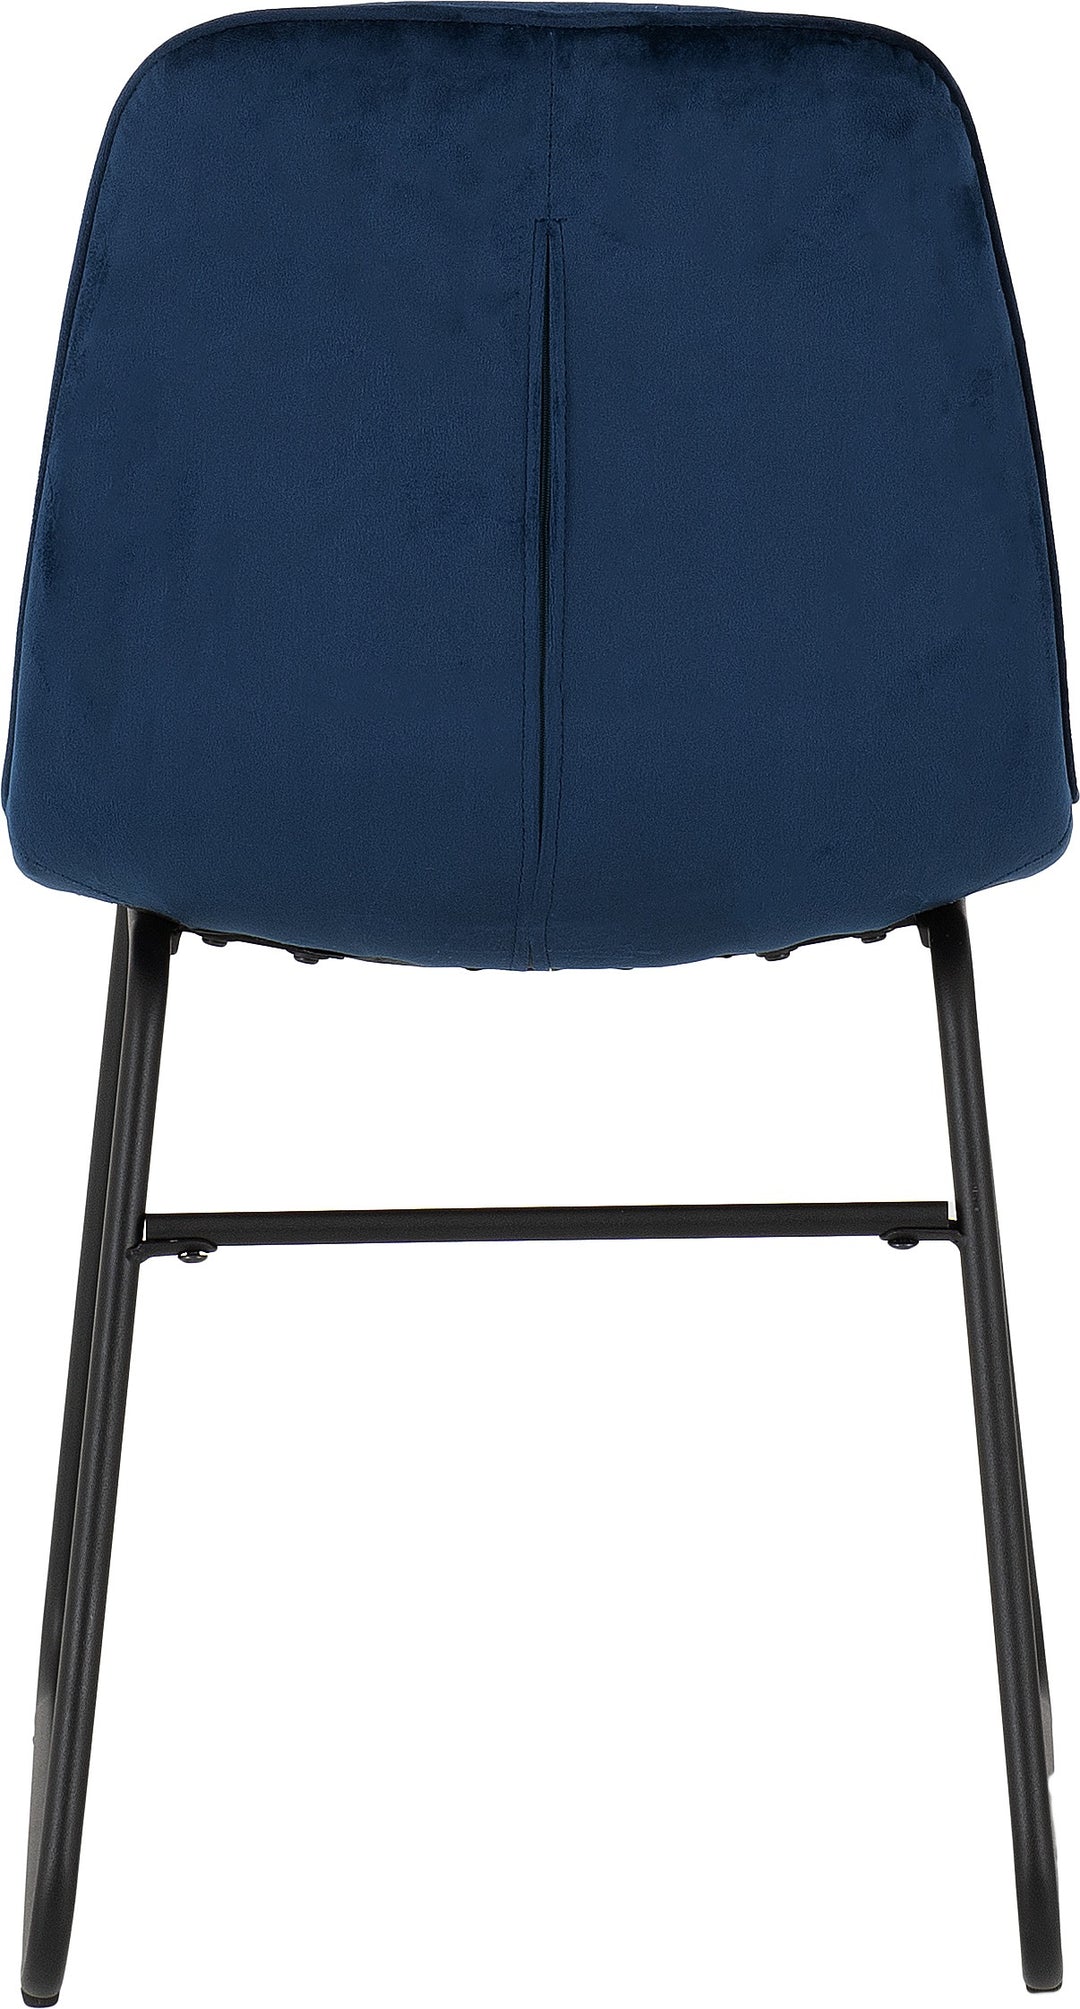 Athens Round & Lukas Dining Set (X4 Chairs) - Concrete/Sapphire Blue Velvet